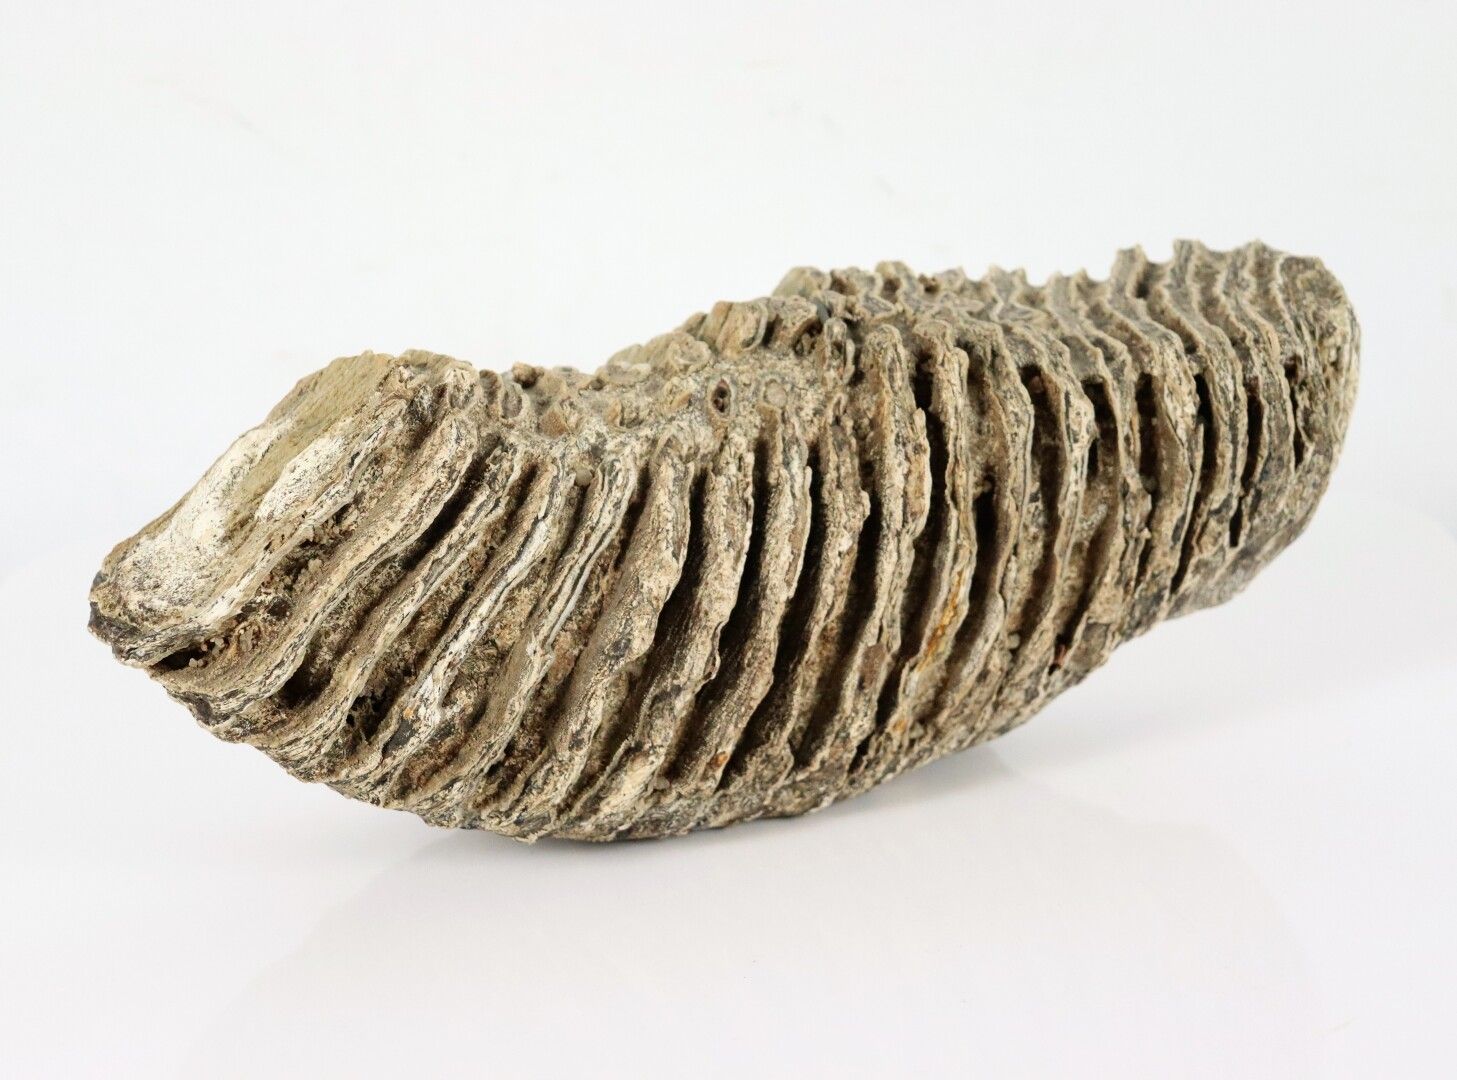 Null 猛犸象臼齿化石。

发现于卢瓦尔河。

高_12厘米L_30厘米